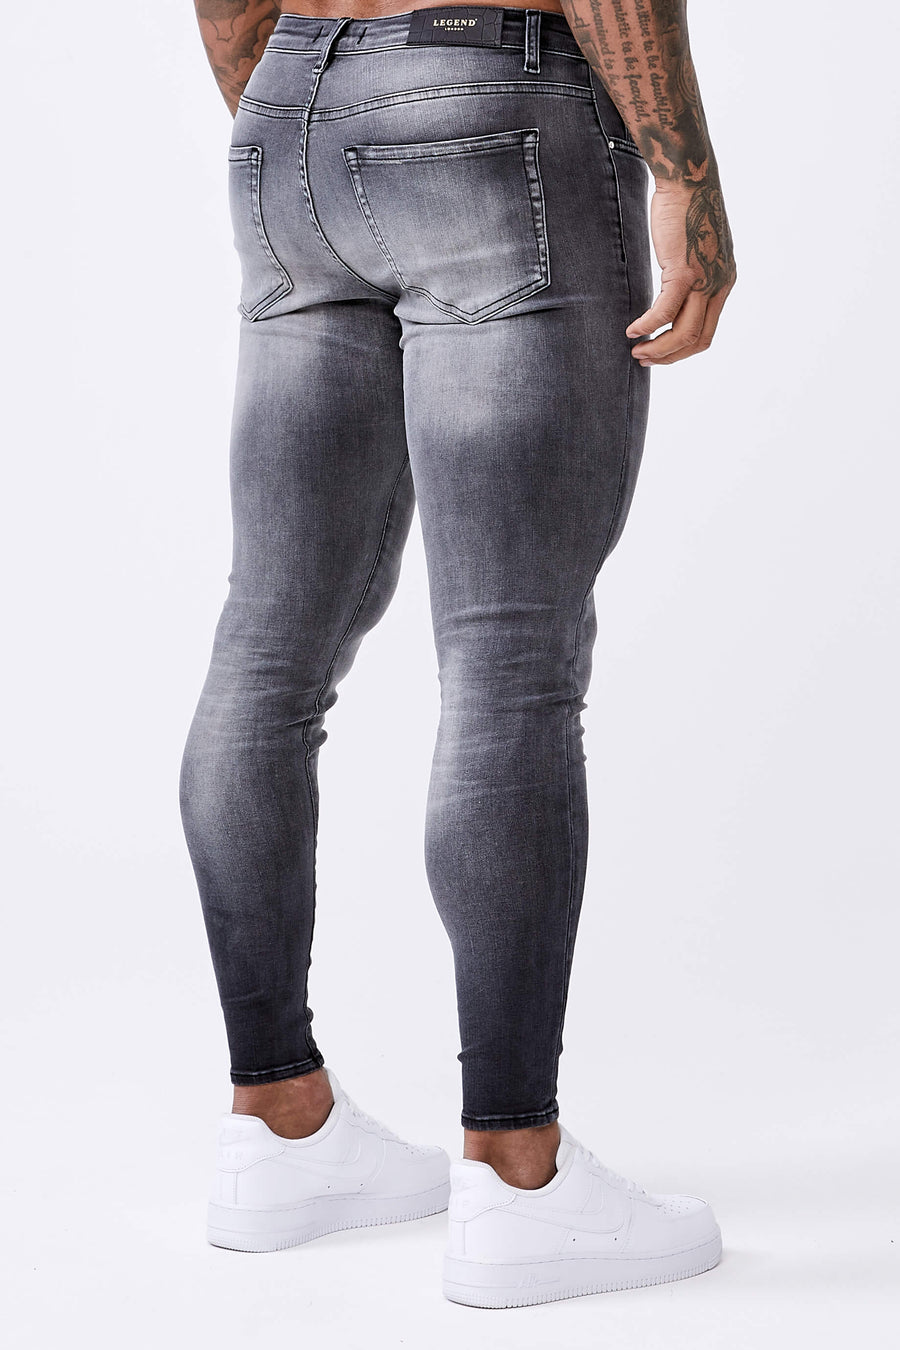 Legend London Jeans Washed Light Grey - Spray-On Jeans